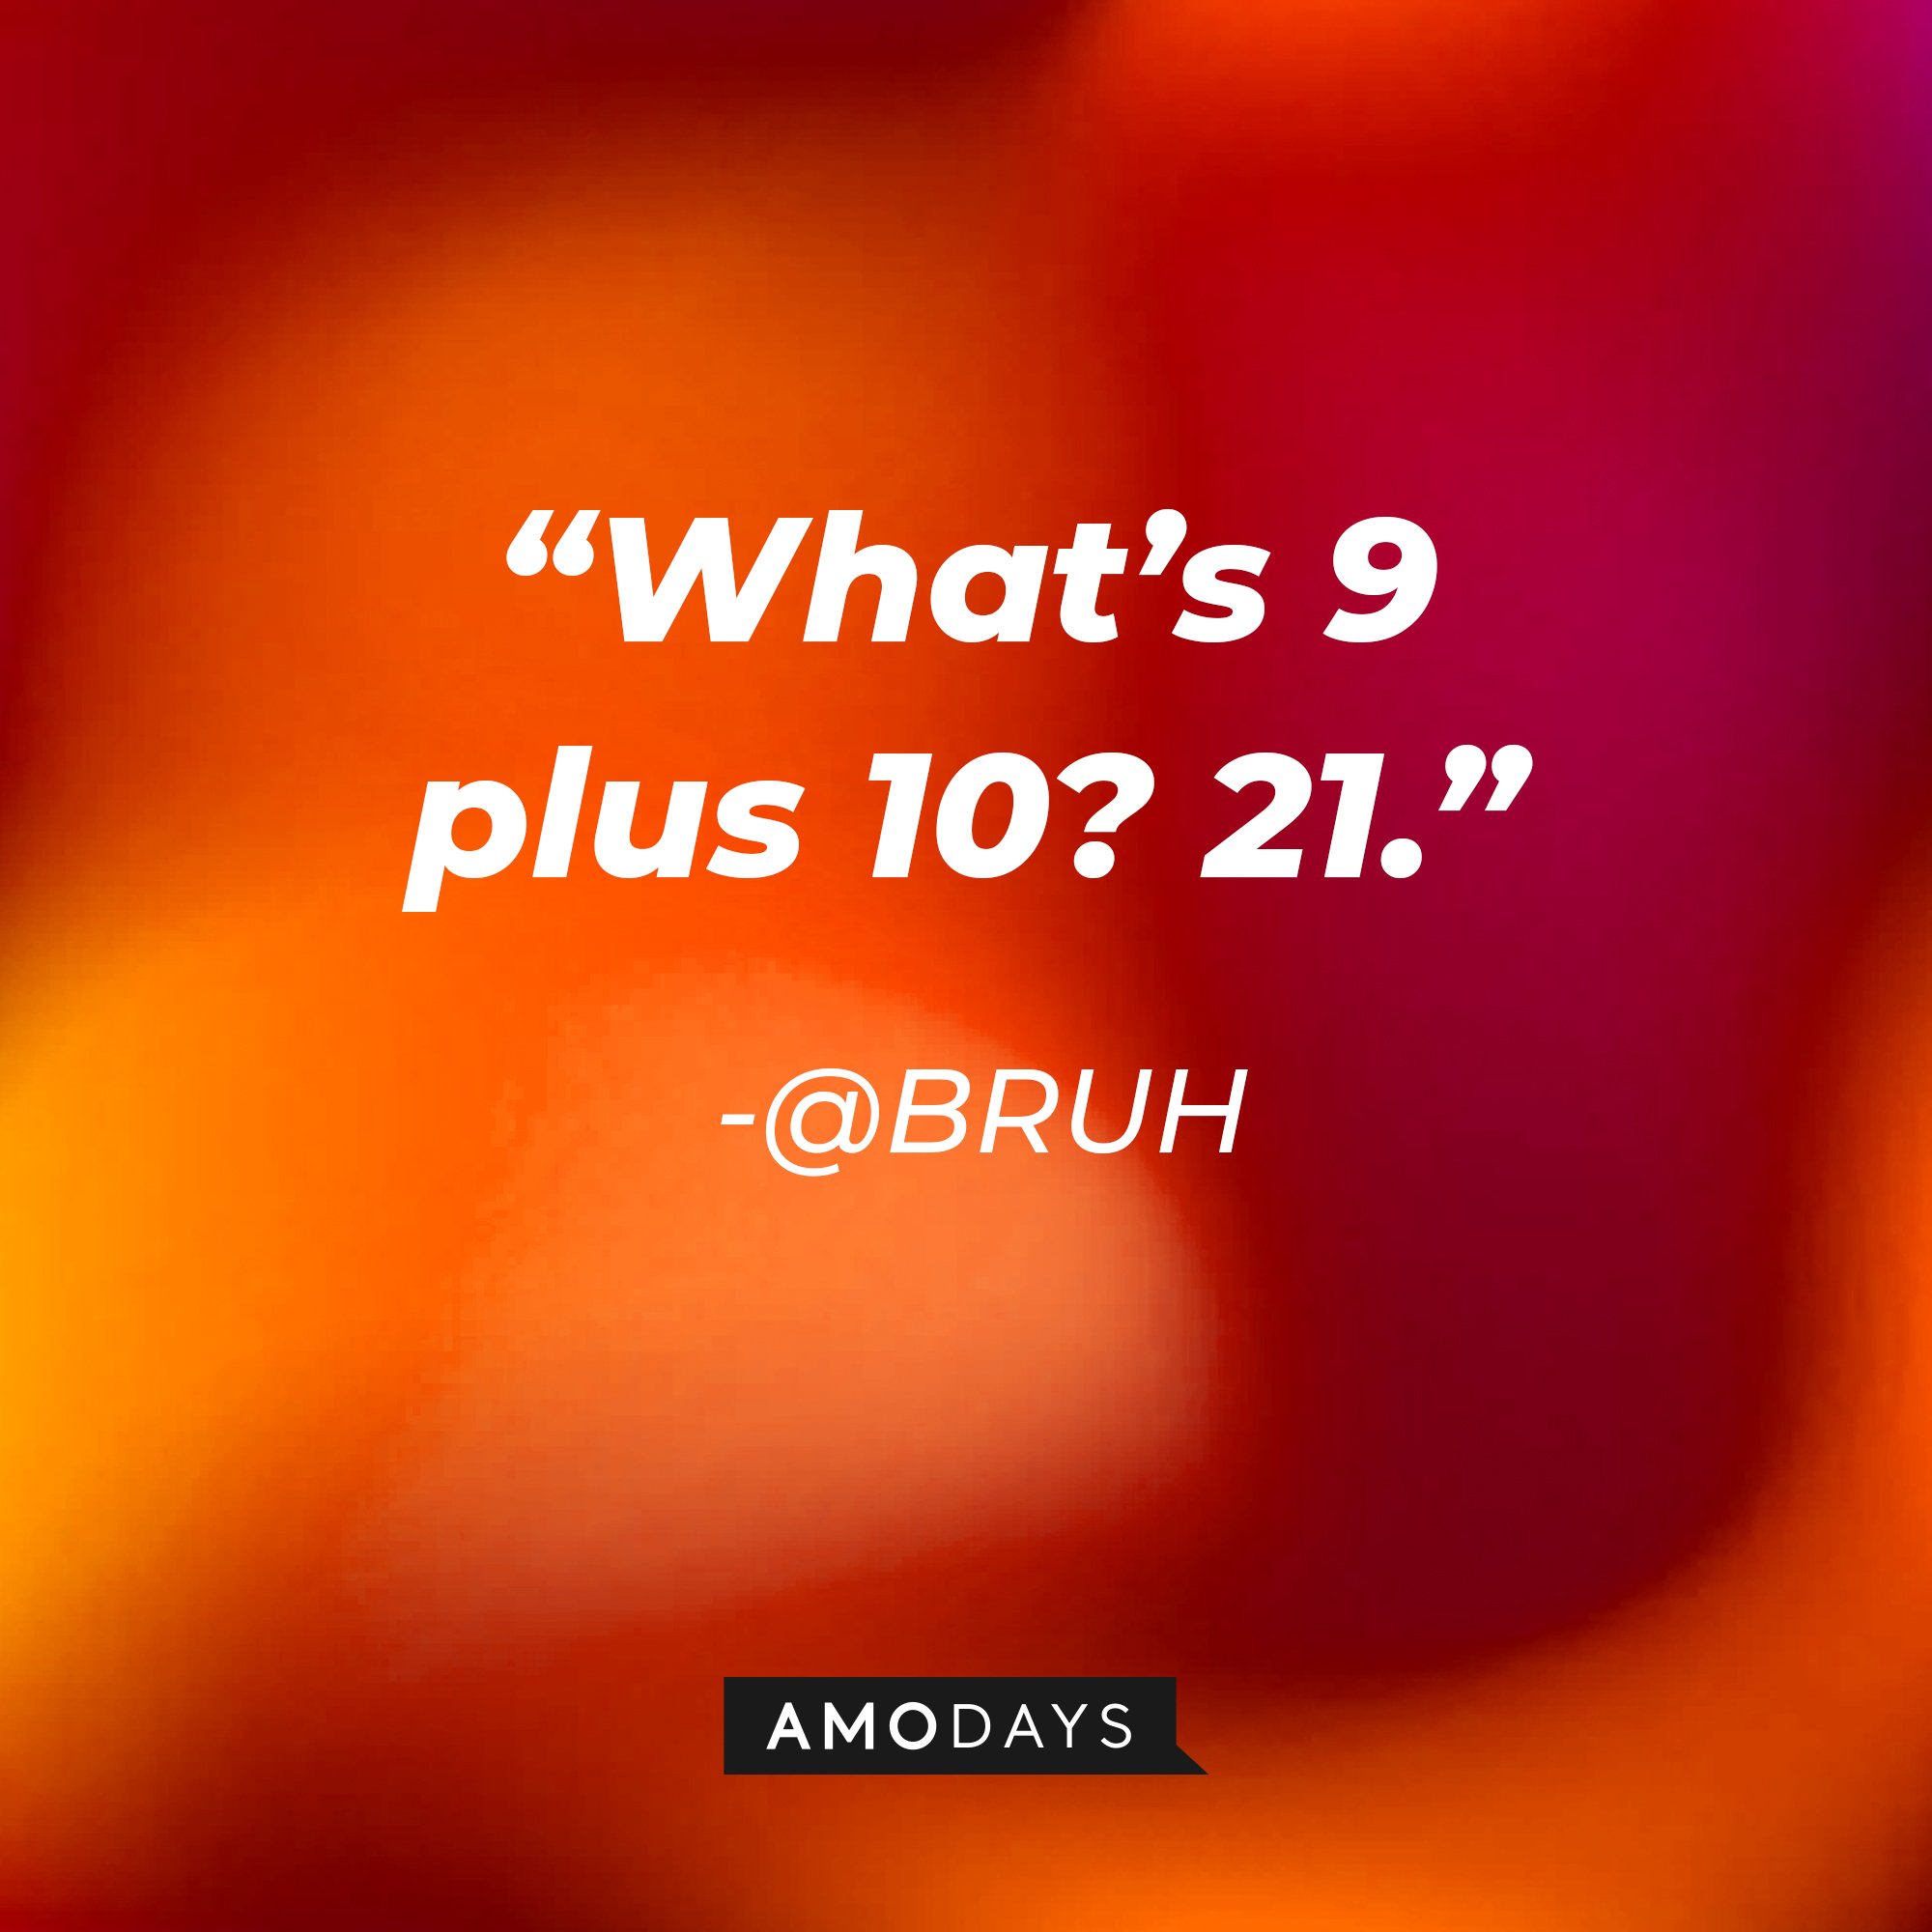 @BRUH's quote: “What’s 9 plus 10? 21.” | Image: AmoDays